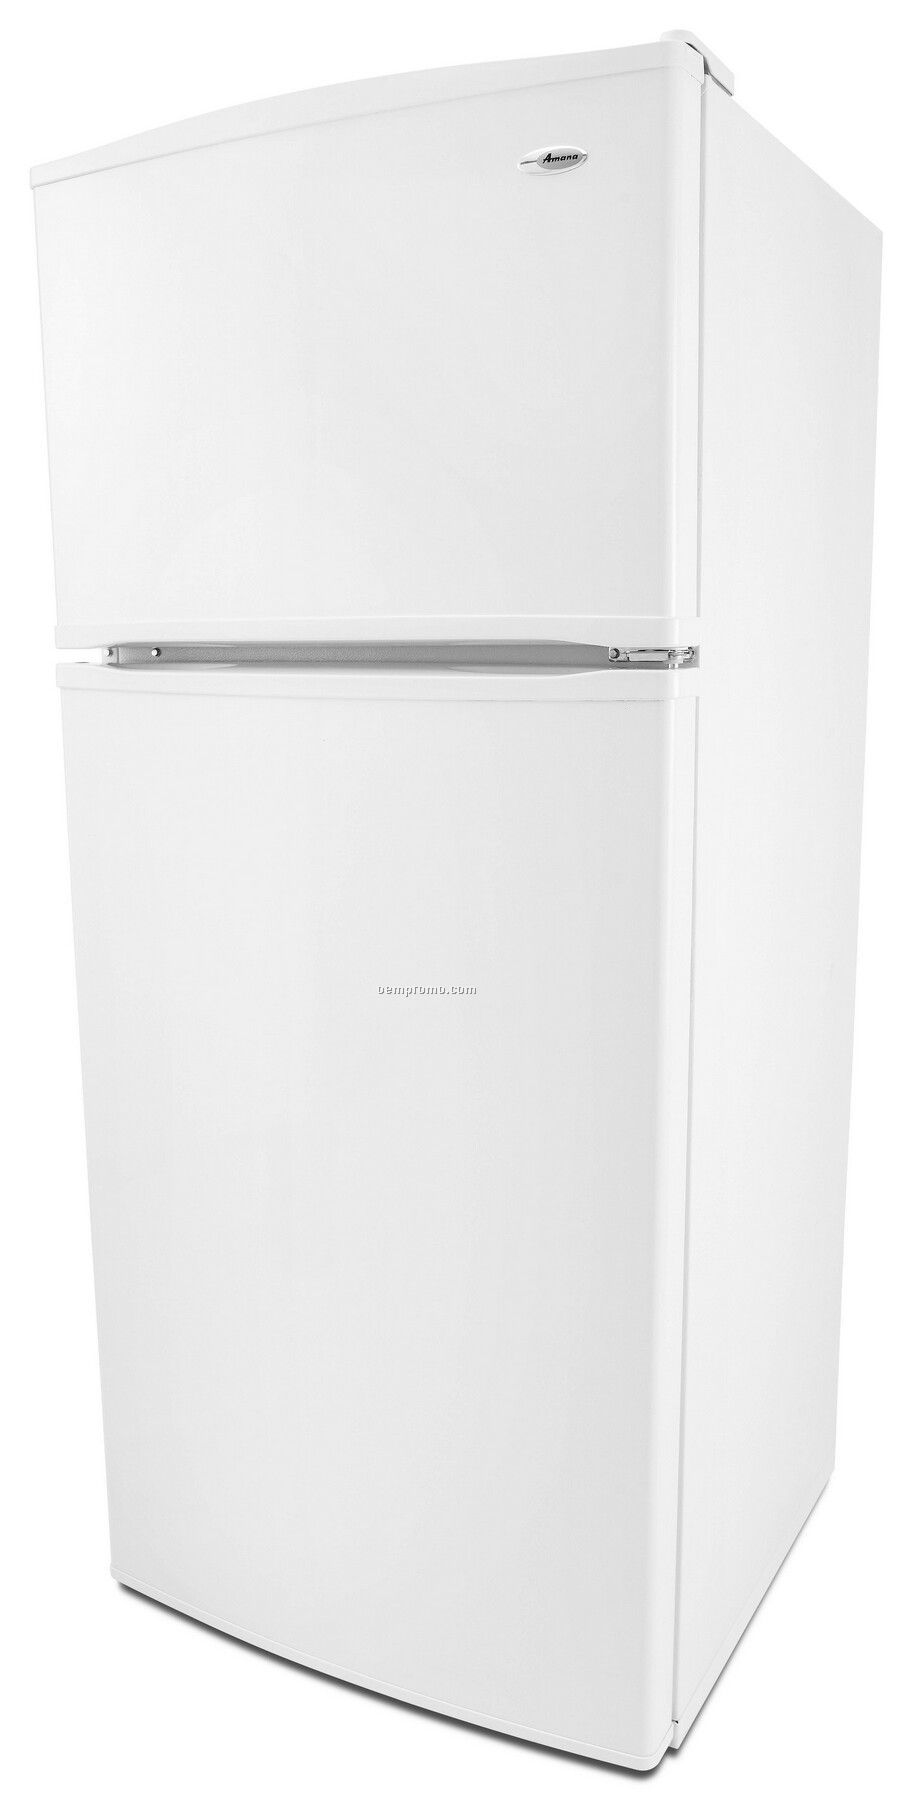 Amana 17-3/5 Cubic Foot Top Freezer Refrigerator (White)